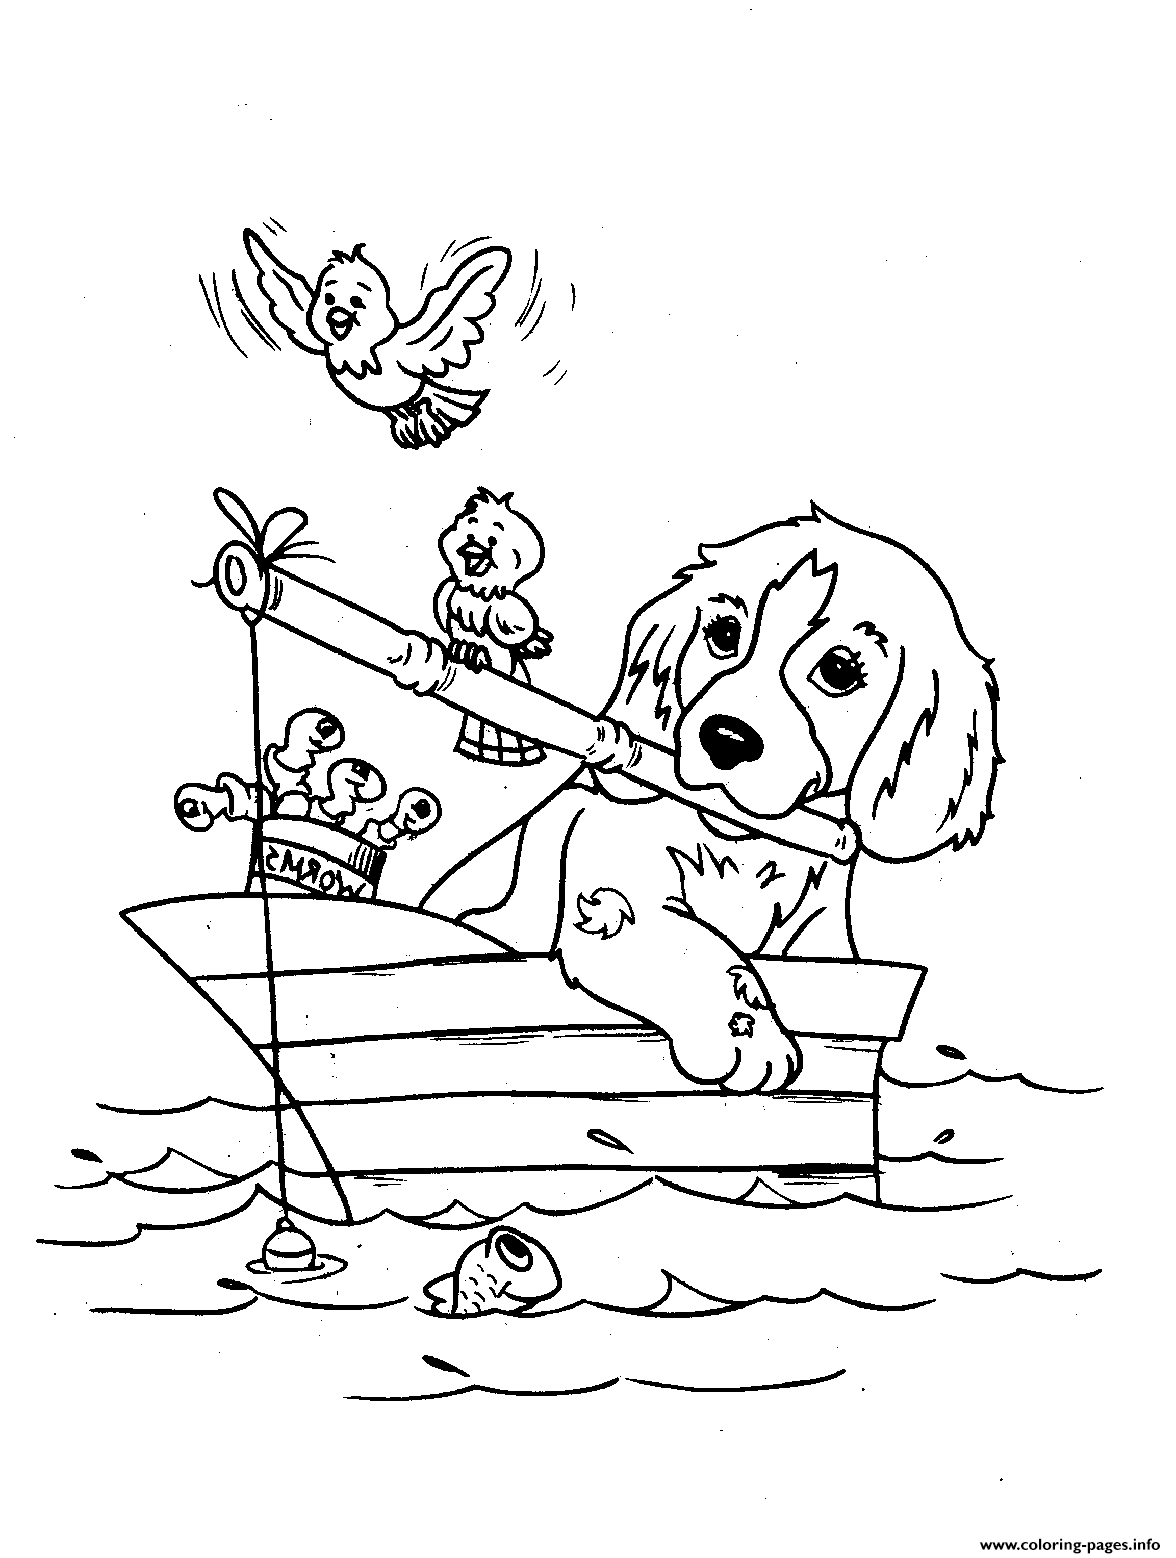 Dog Fishing 9929 coloring